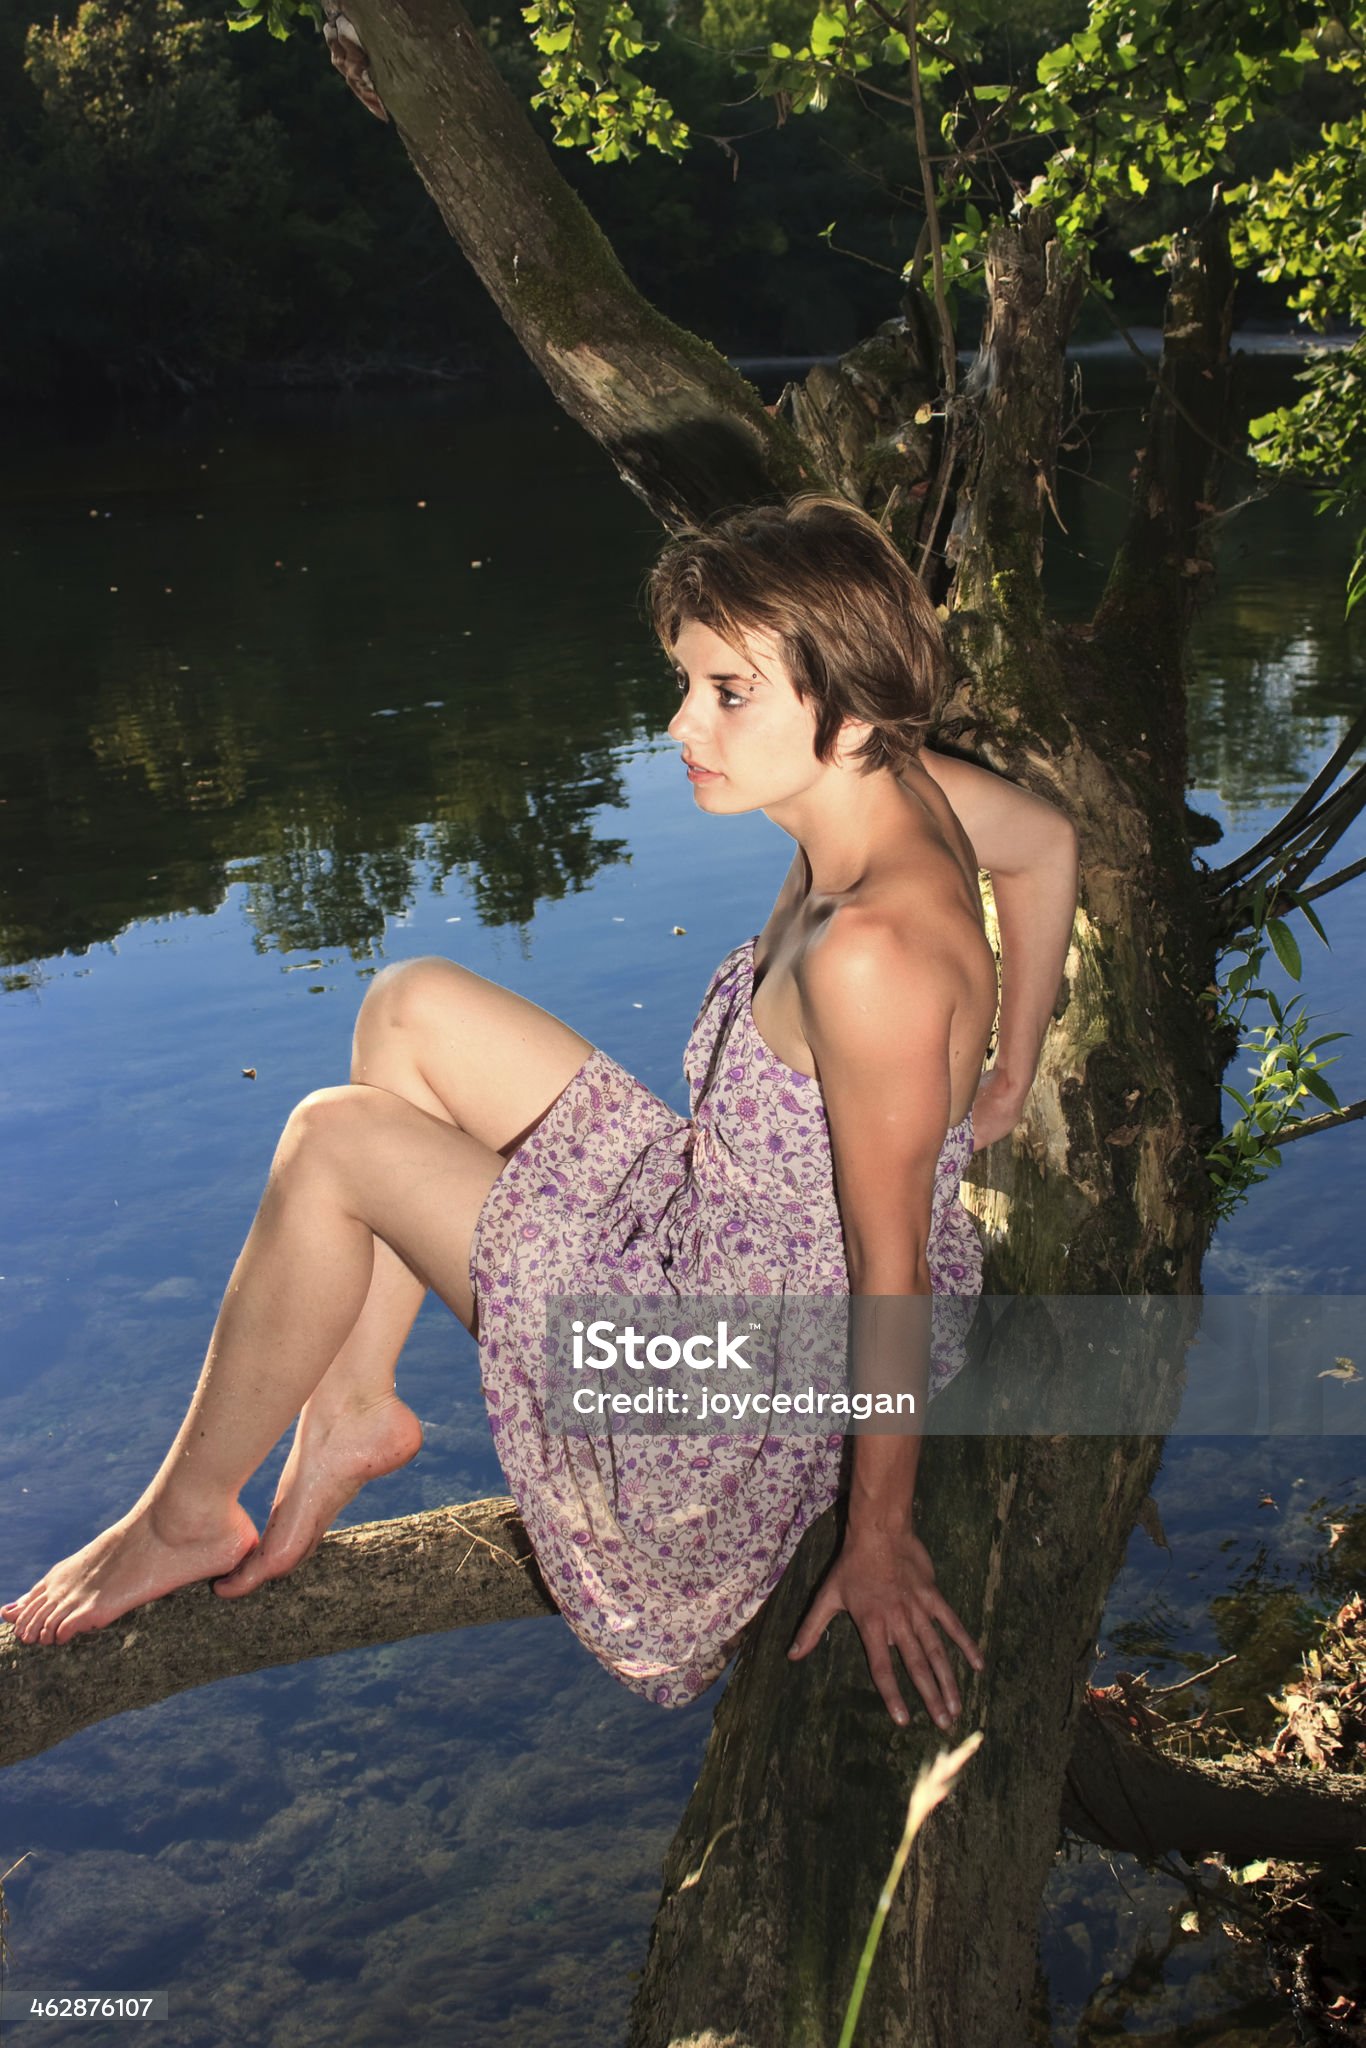 https://media.istockphoto.com/id/462876107/photo/beautiful-young-woman-sitting-by-the-river.jpg?s=2048x2048&amp;w=is&amp;k=20&amp;c=wGUpXSXv0kRZPJdbz1Y72VAy4NU7cNj4jL9qQvs5zmM=